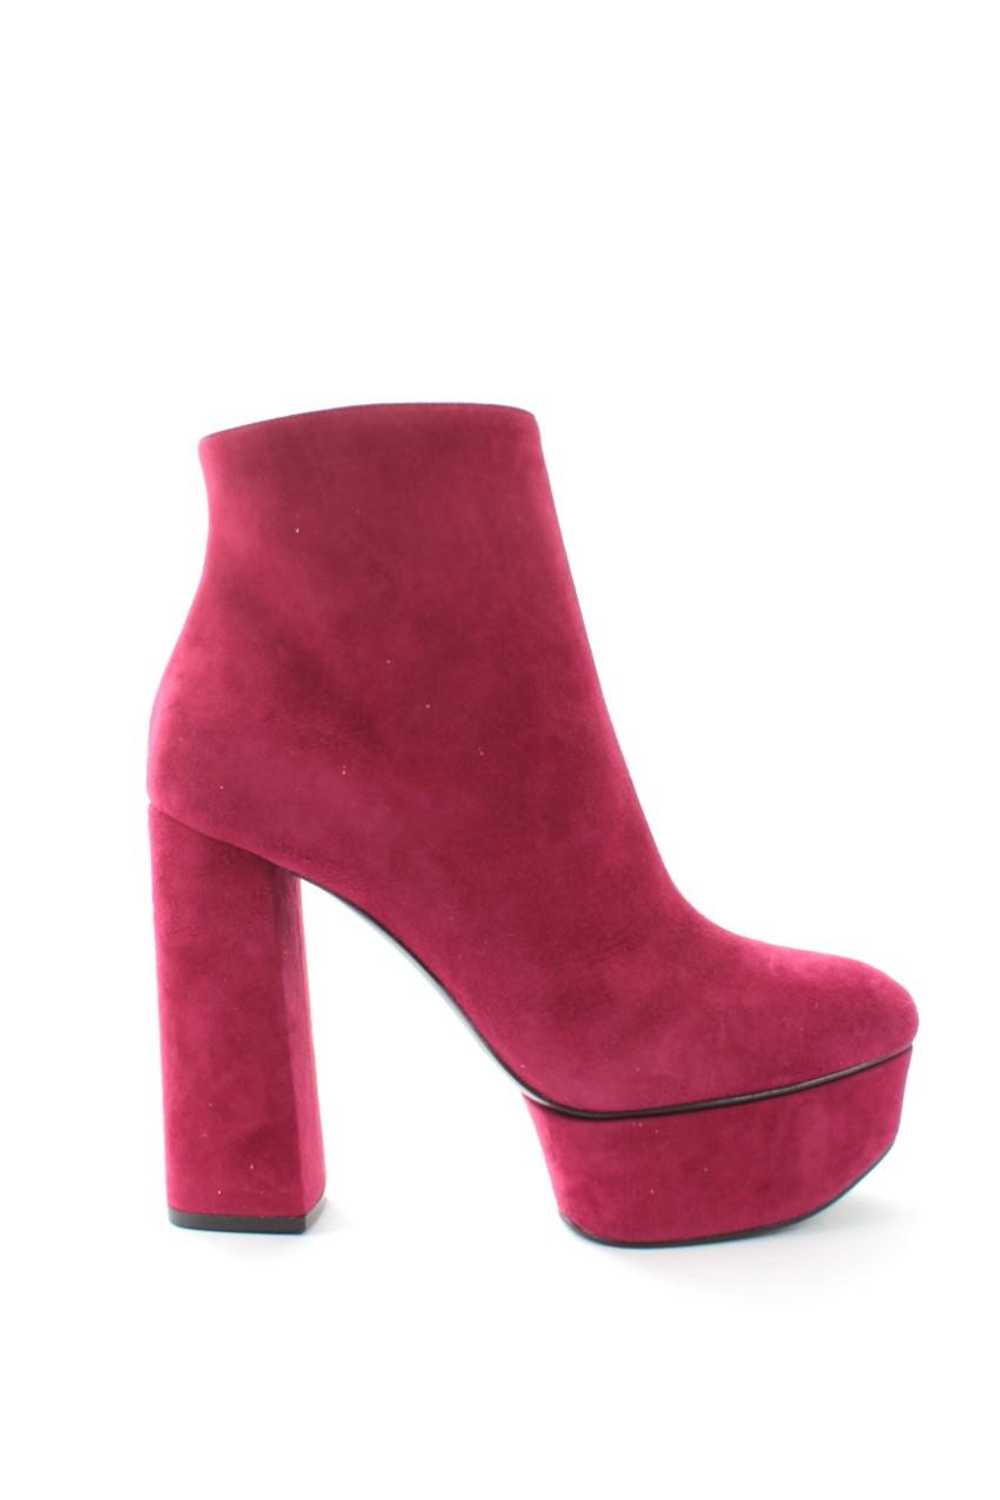 Casadei Casadei pink suede platform ankle boots - image 2